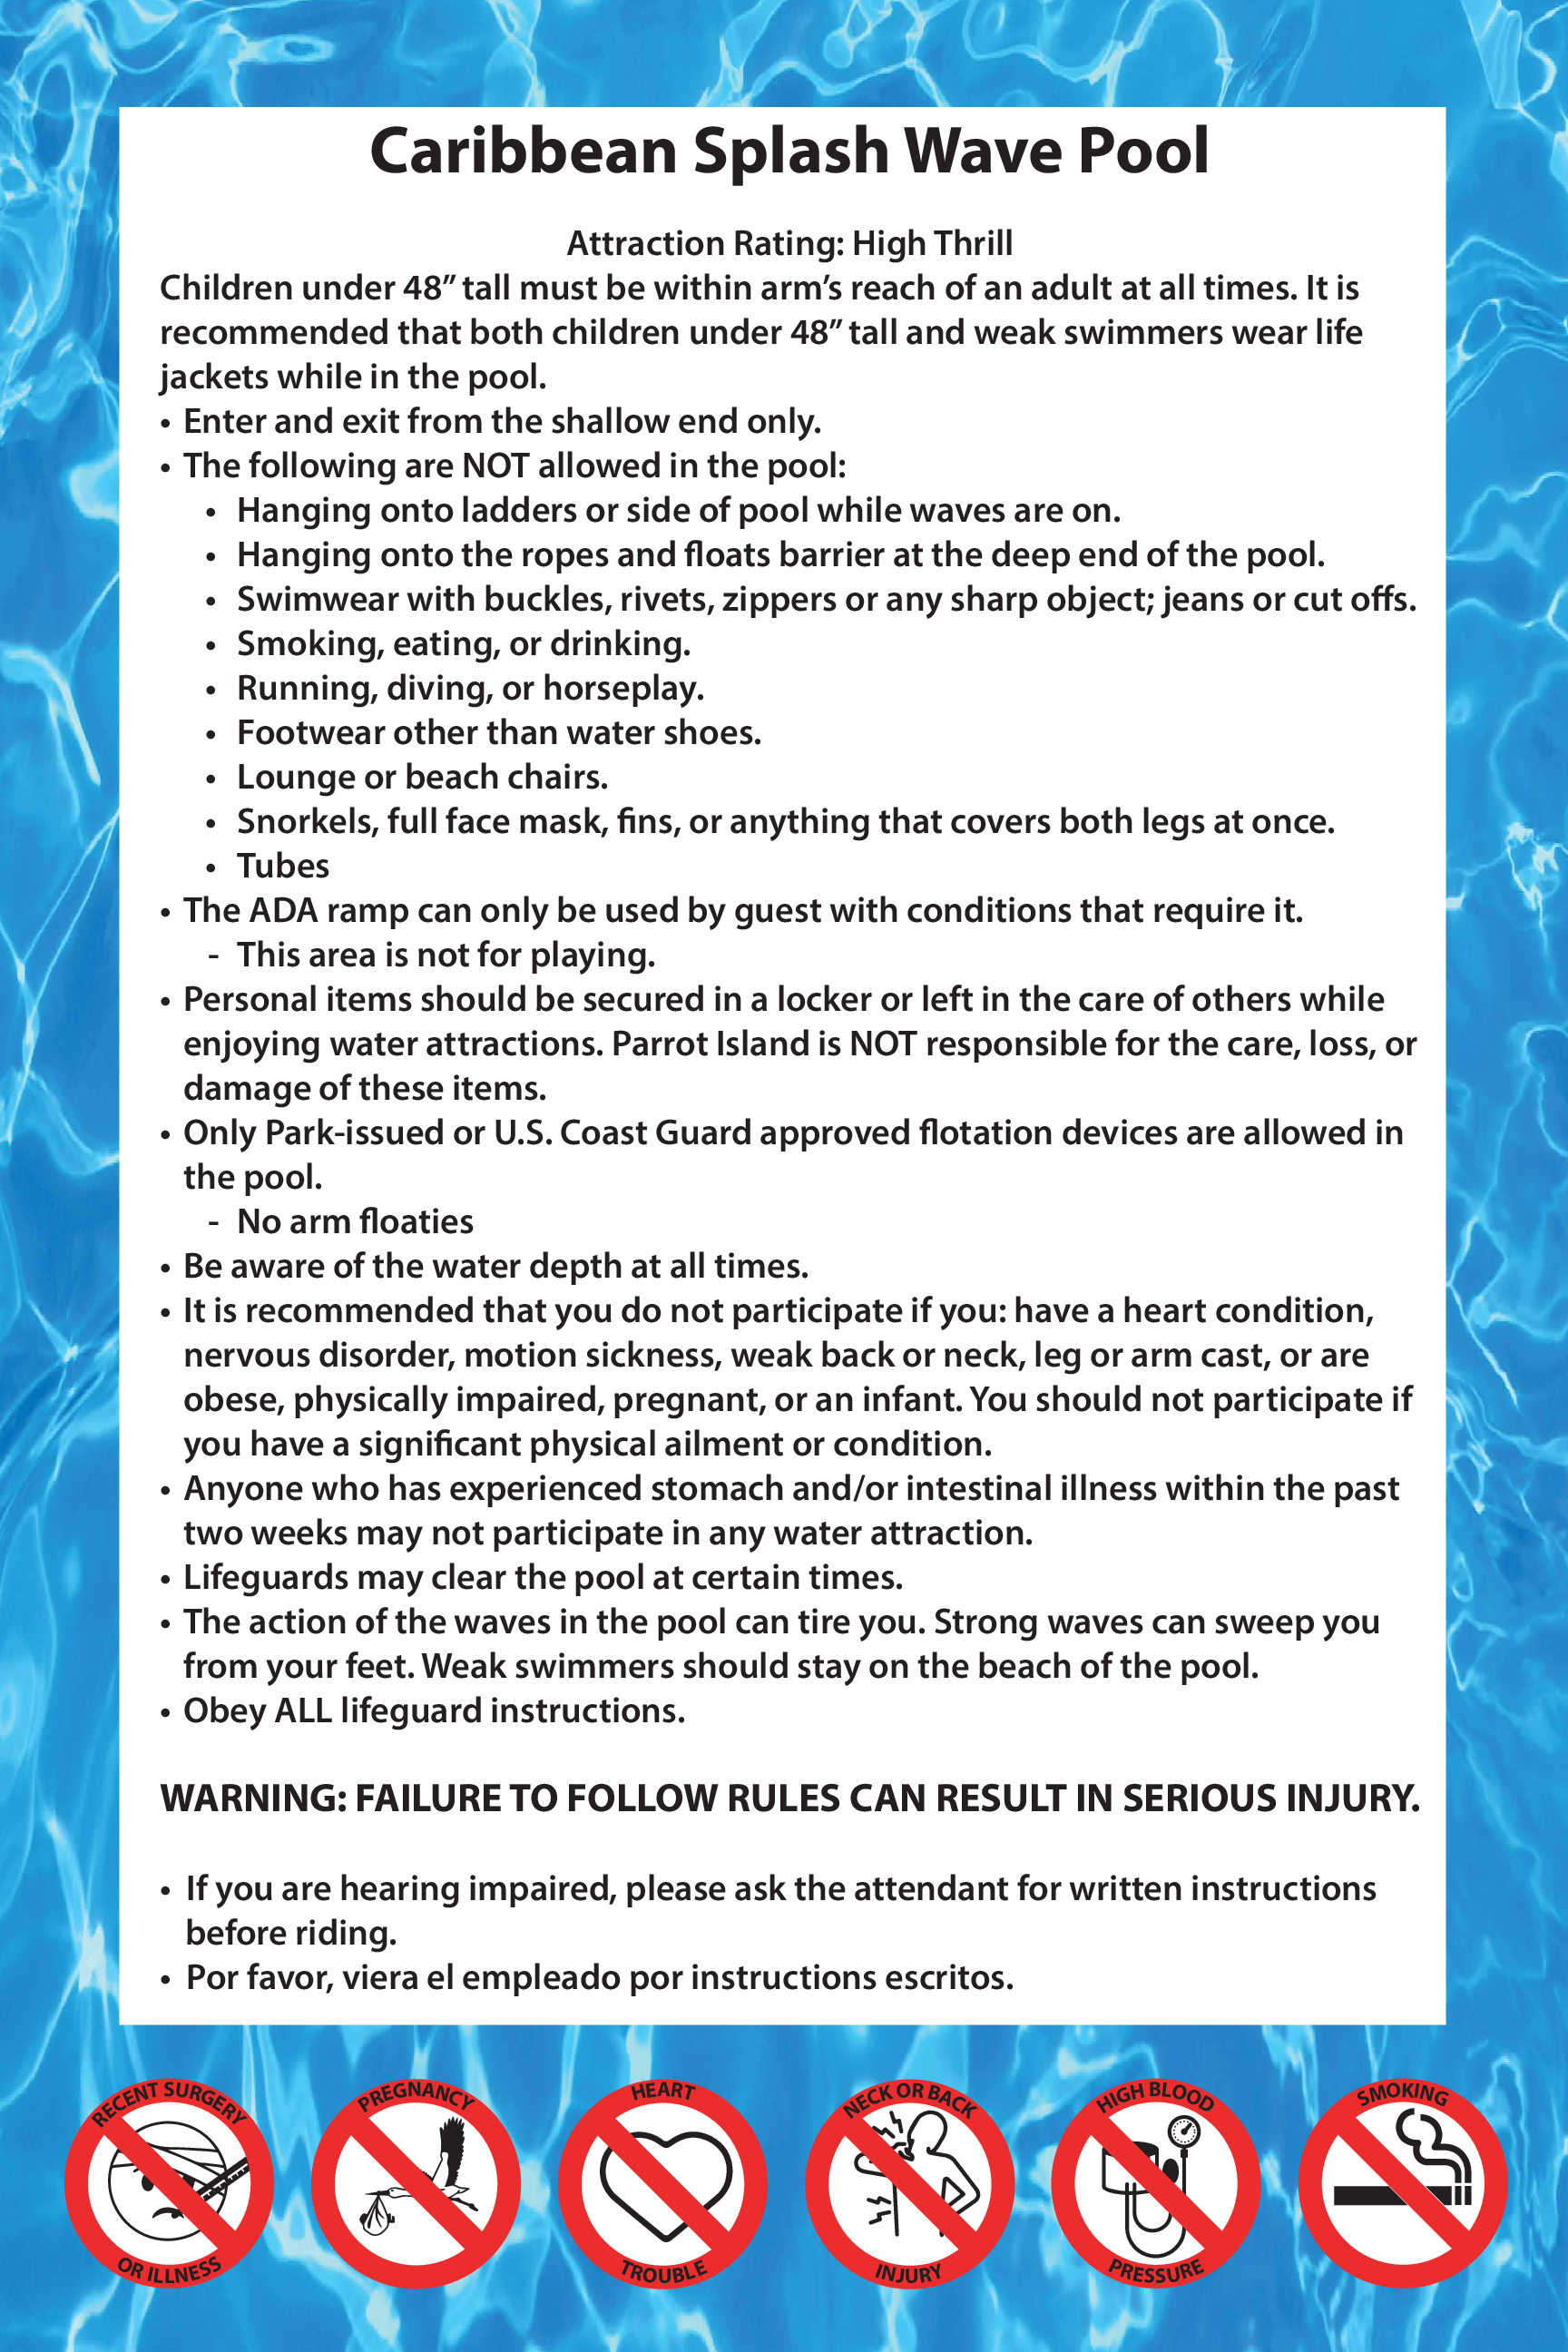 Caribbean Splash Wave Pool Rules 24x36